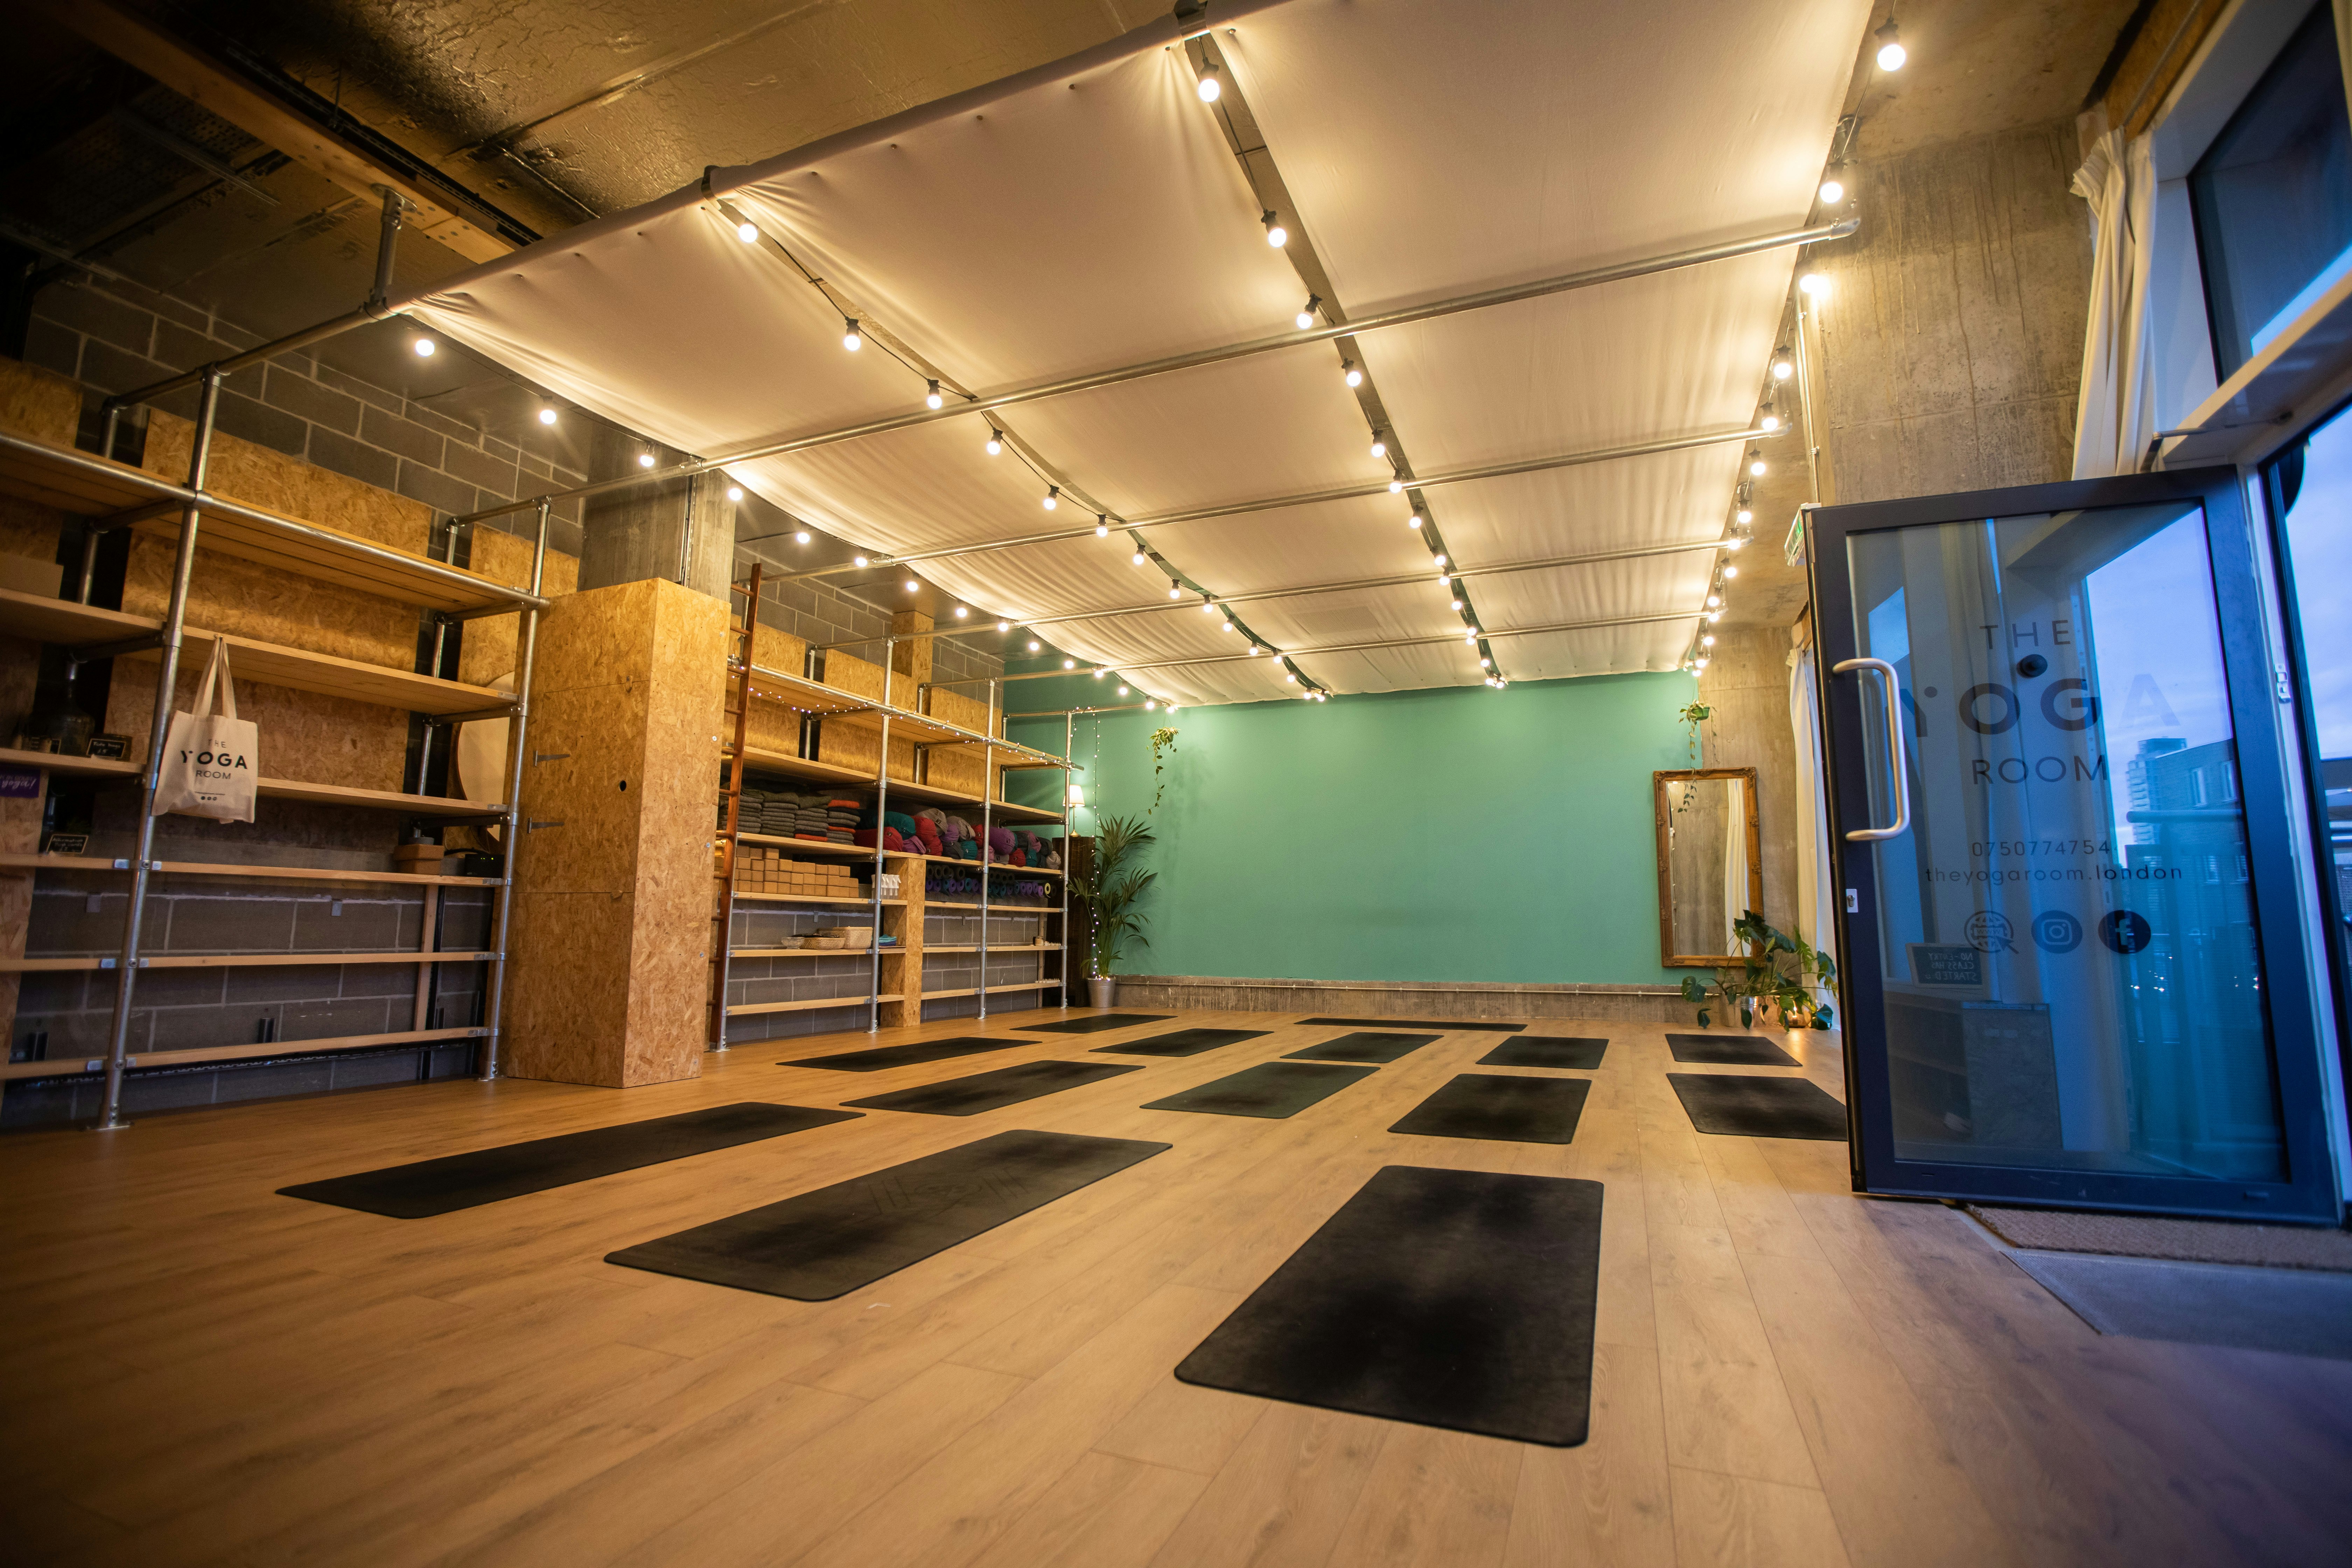 Pilates Studios Venues in London - The Yoga Room